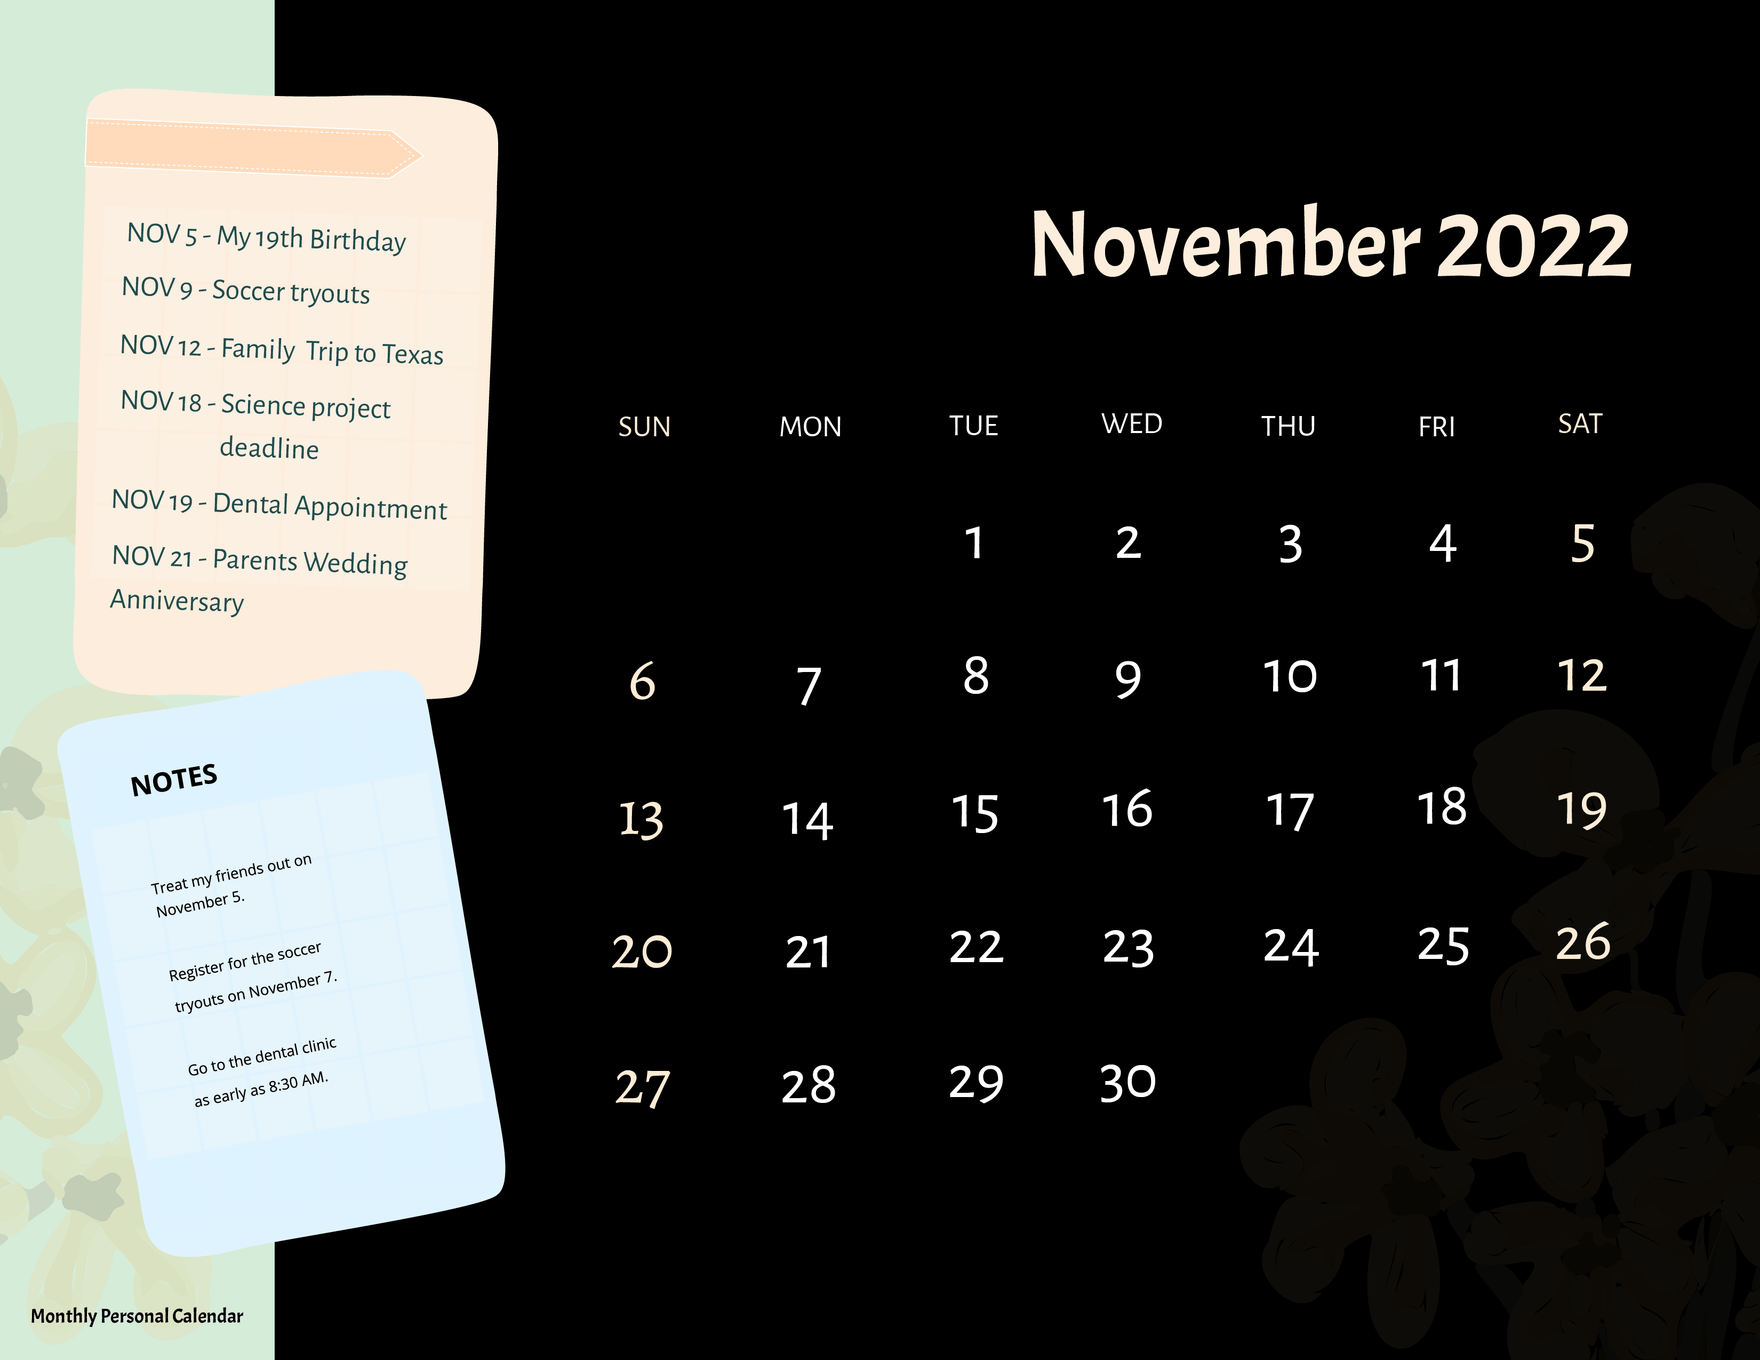 November 2022 Photo Calendar Template in Word, Illustrator, PSD